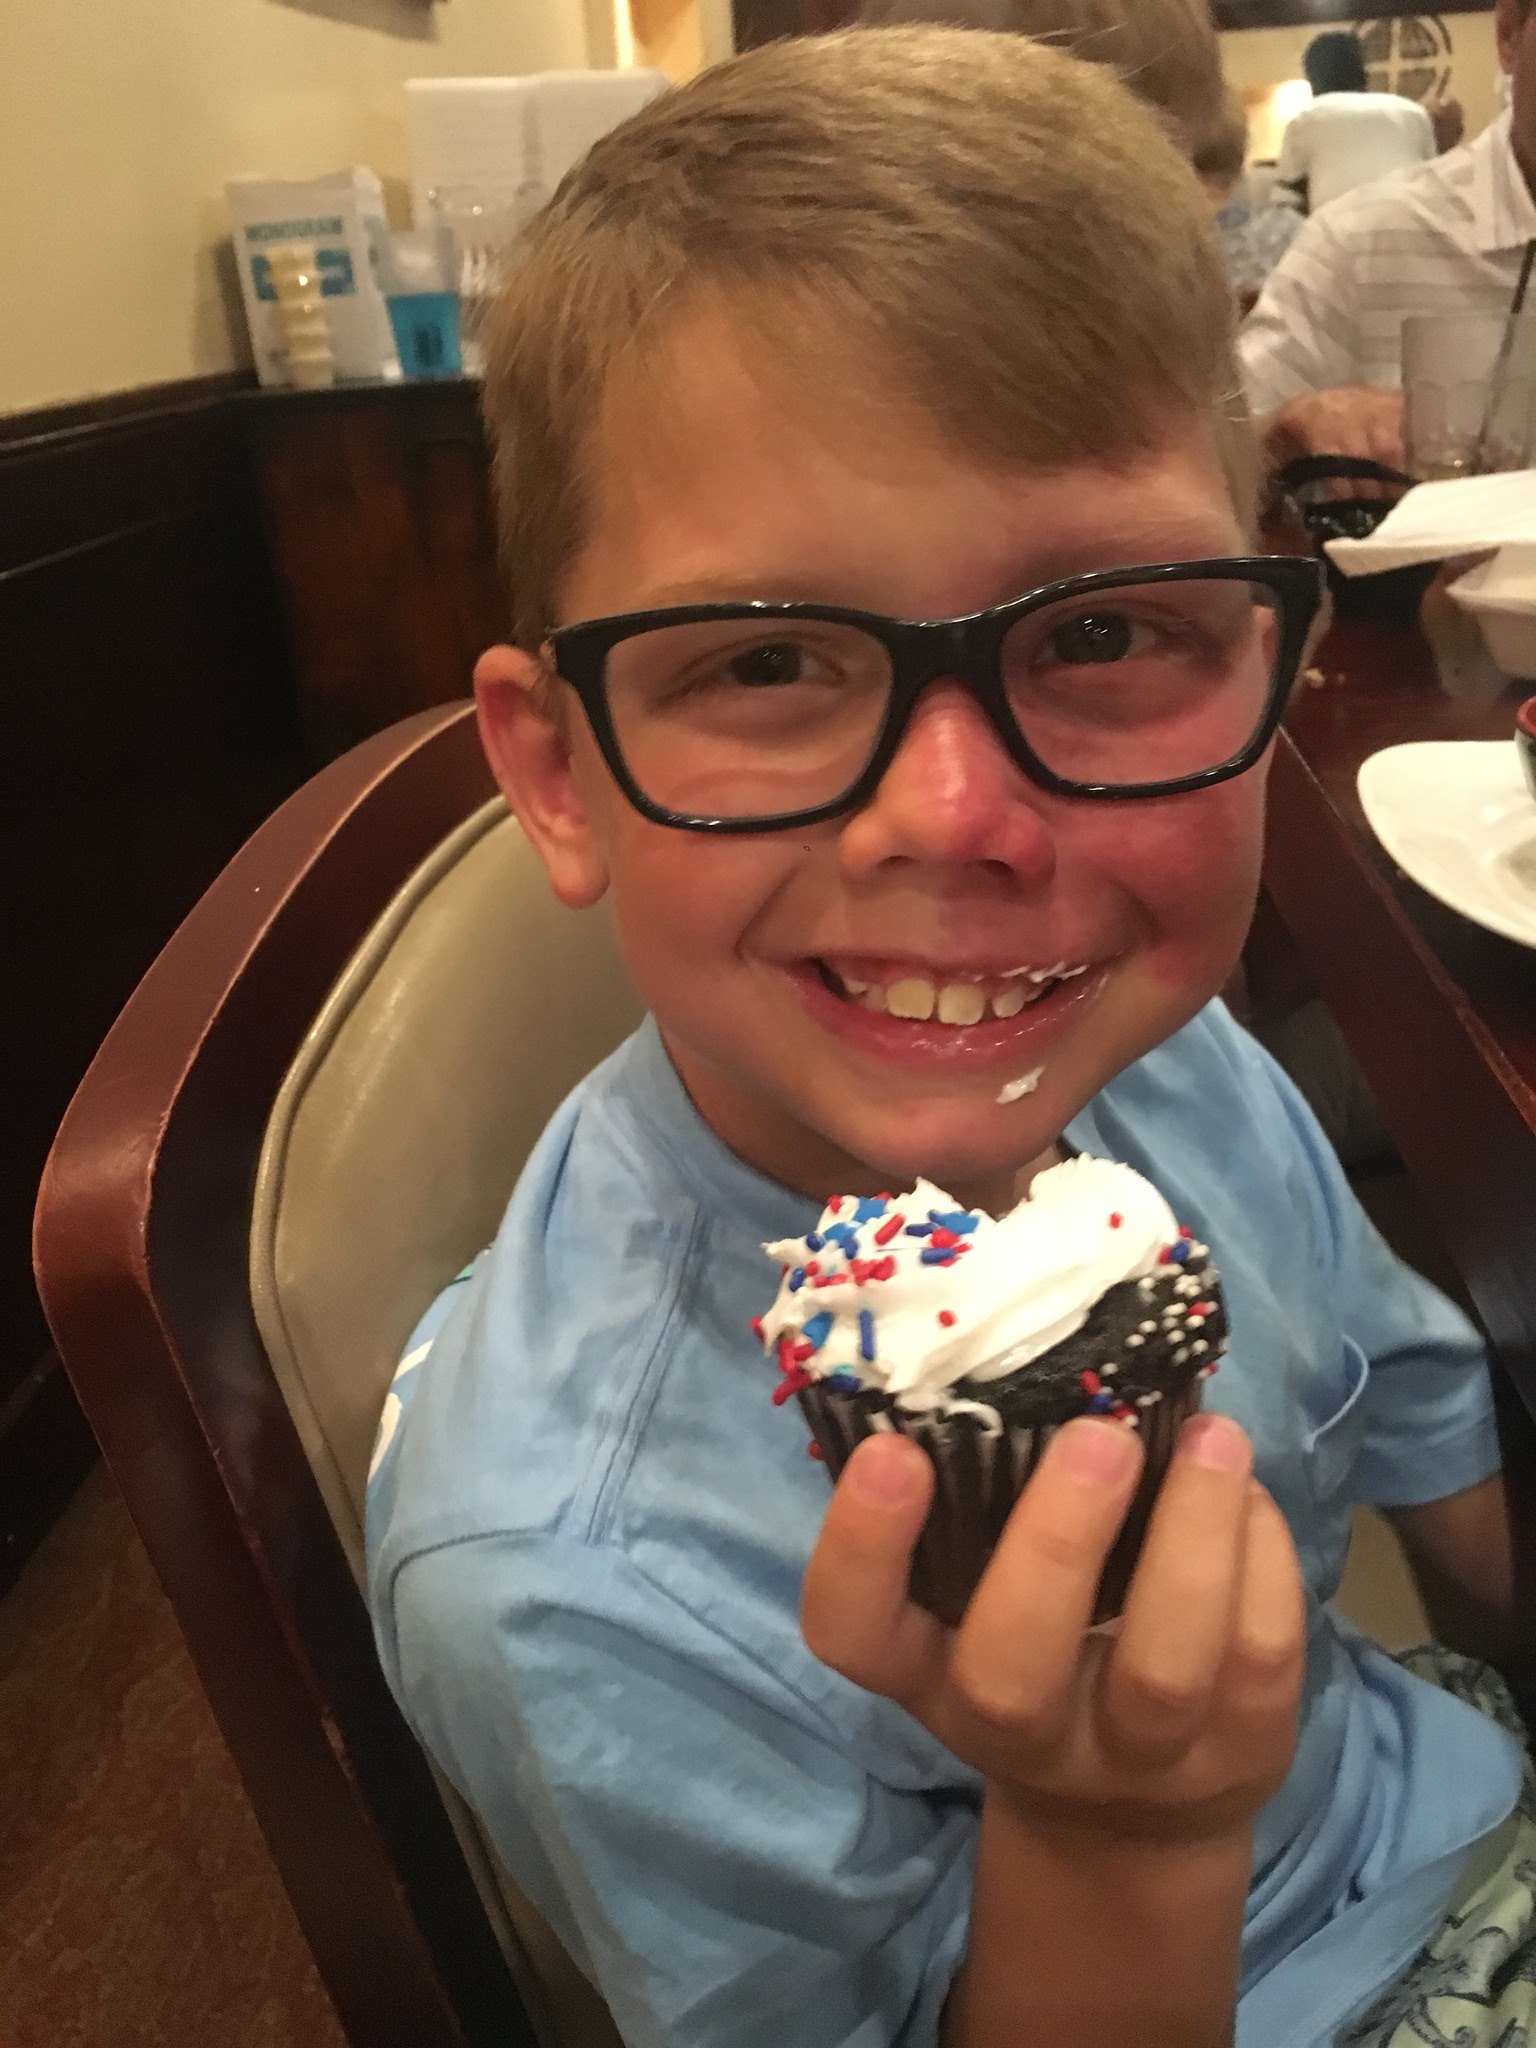 A little boy with a birthmark on his cheek, eating a cupcake.